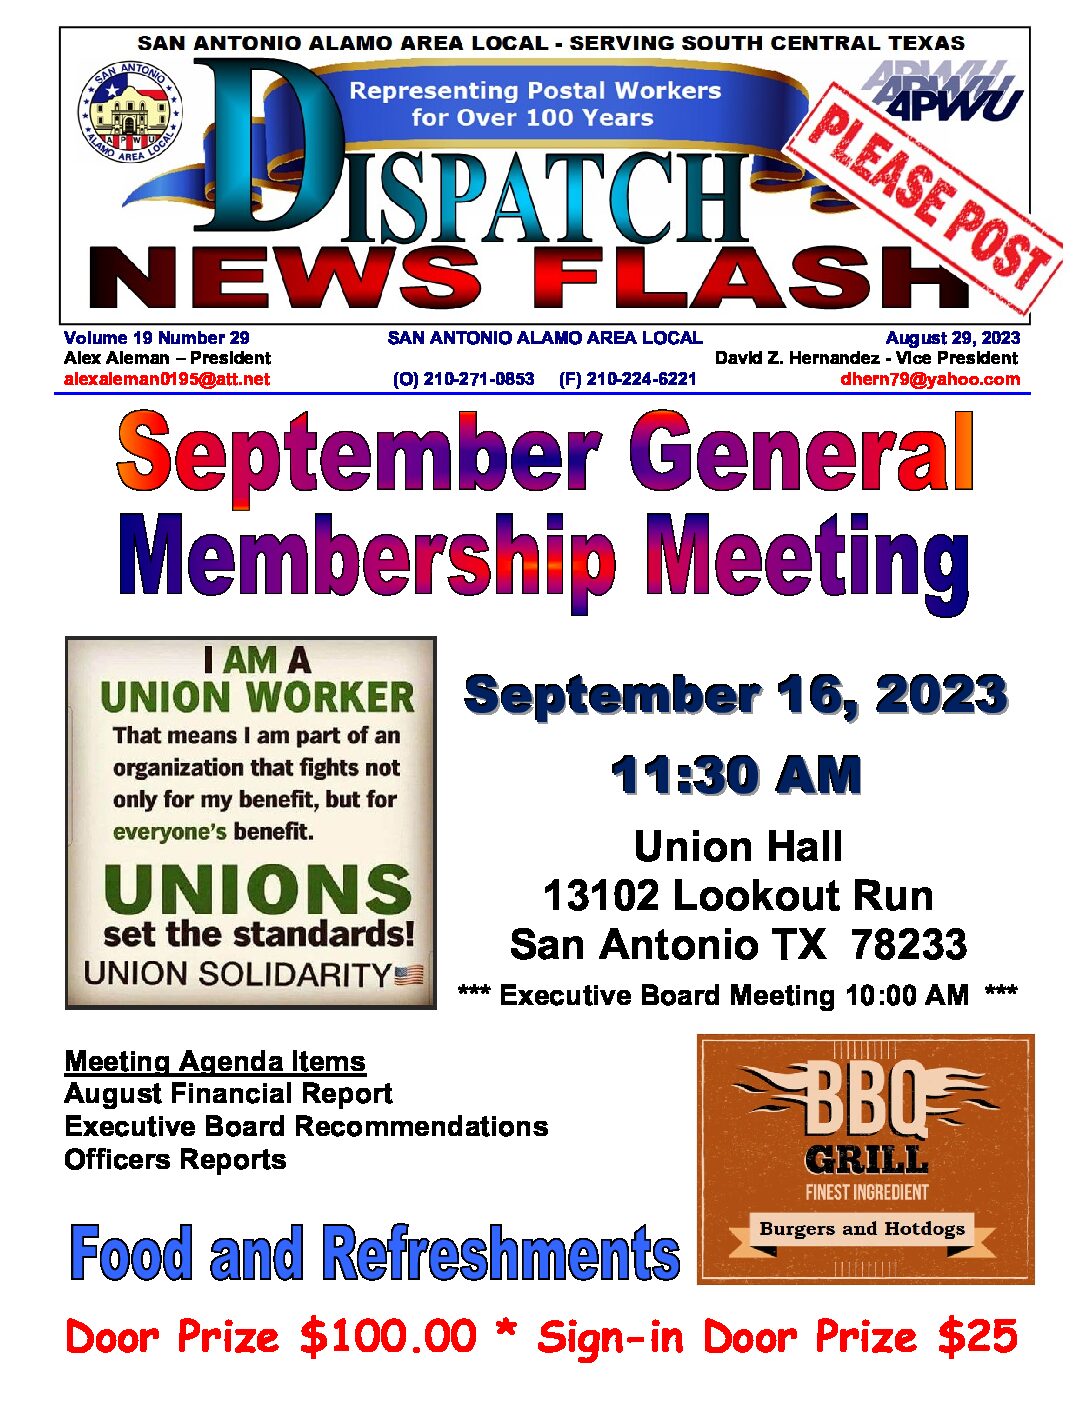 NewsFlash 19-29 September General Membership Meeting Notice - 